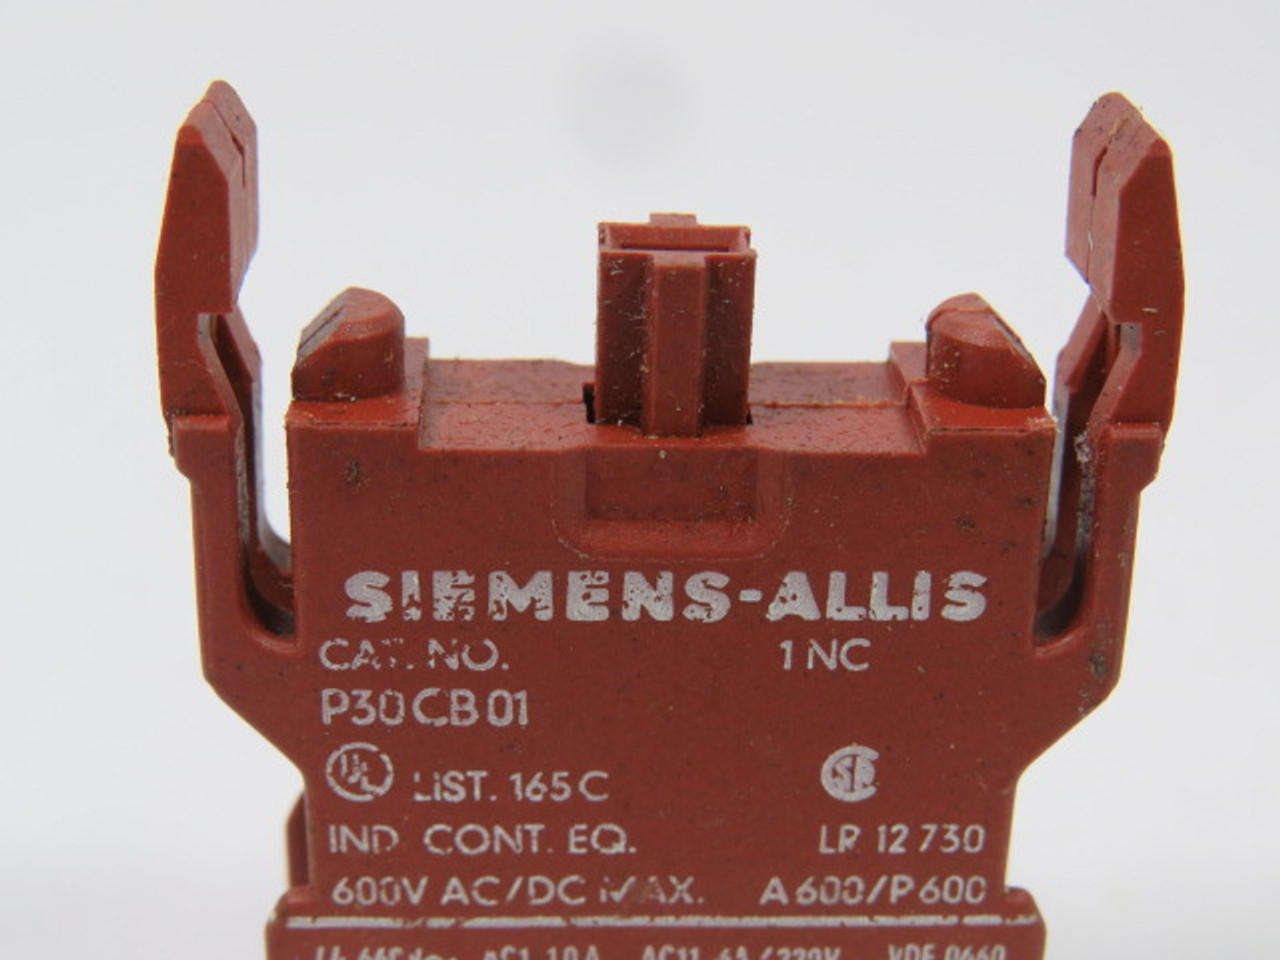 Siemens-Allis P30CB01 Contact Block 1NC USED